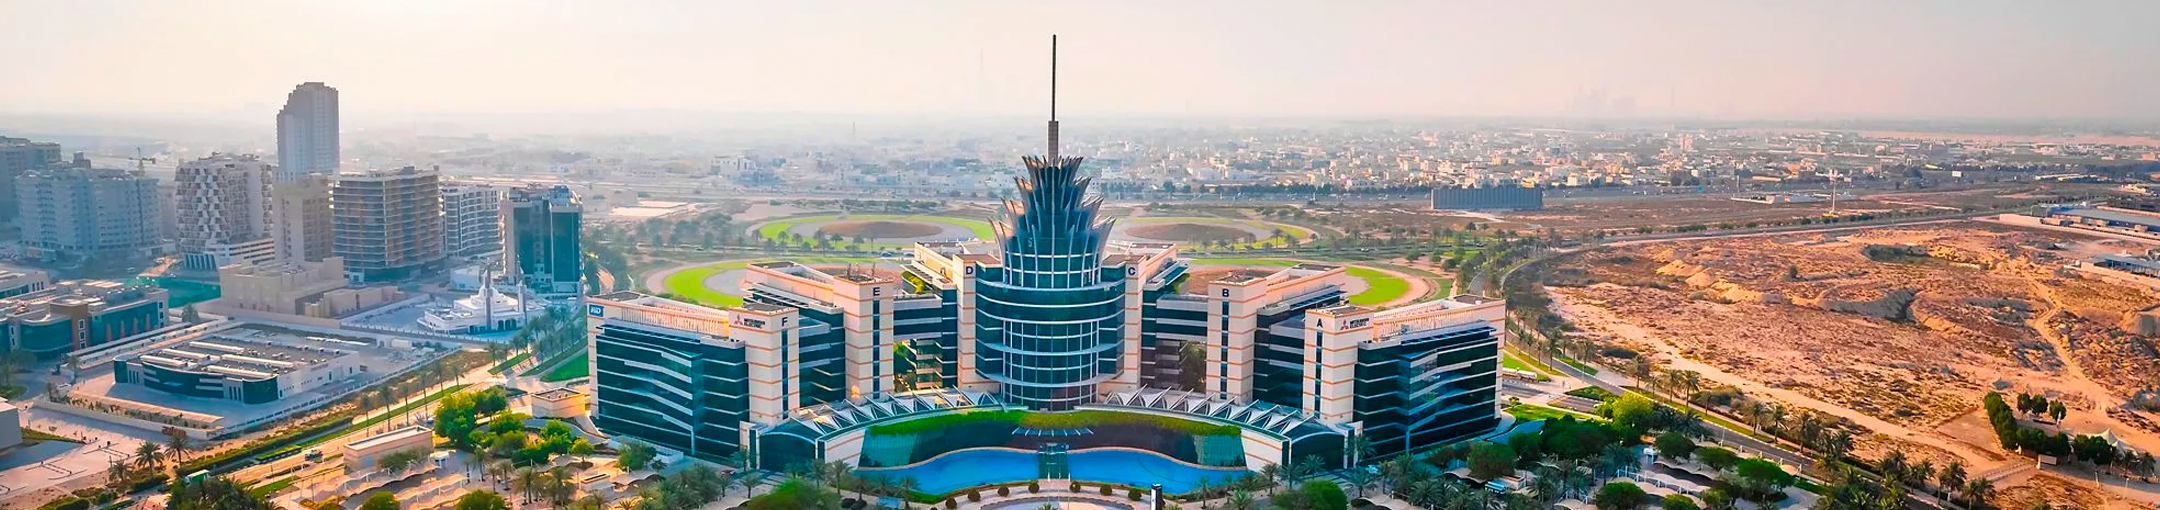 Dubai Silicon Oasis HQs